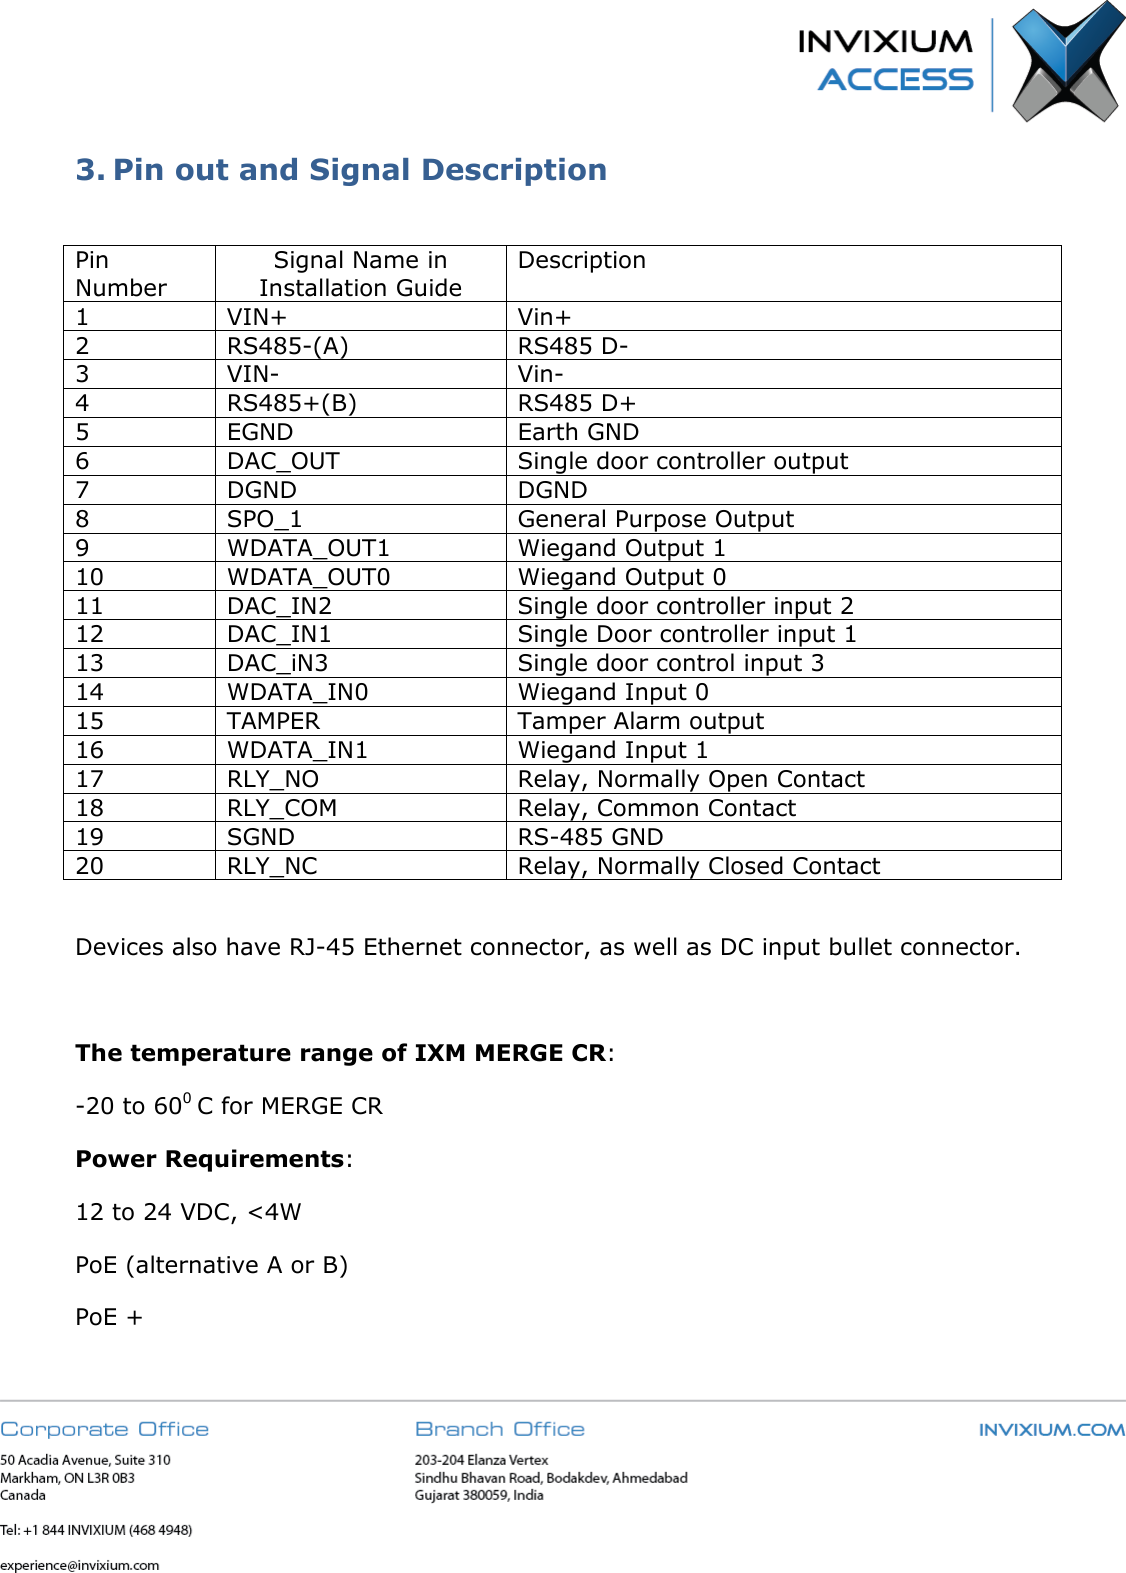 Page 6 of Invixium Access MRGCR IXM MERGE CR User Manual